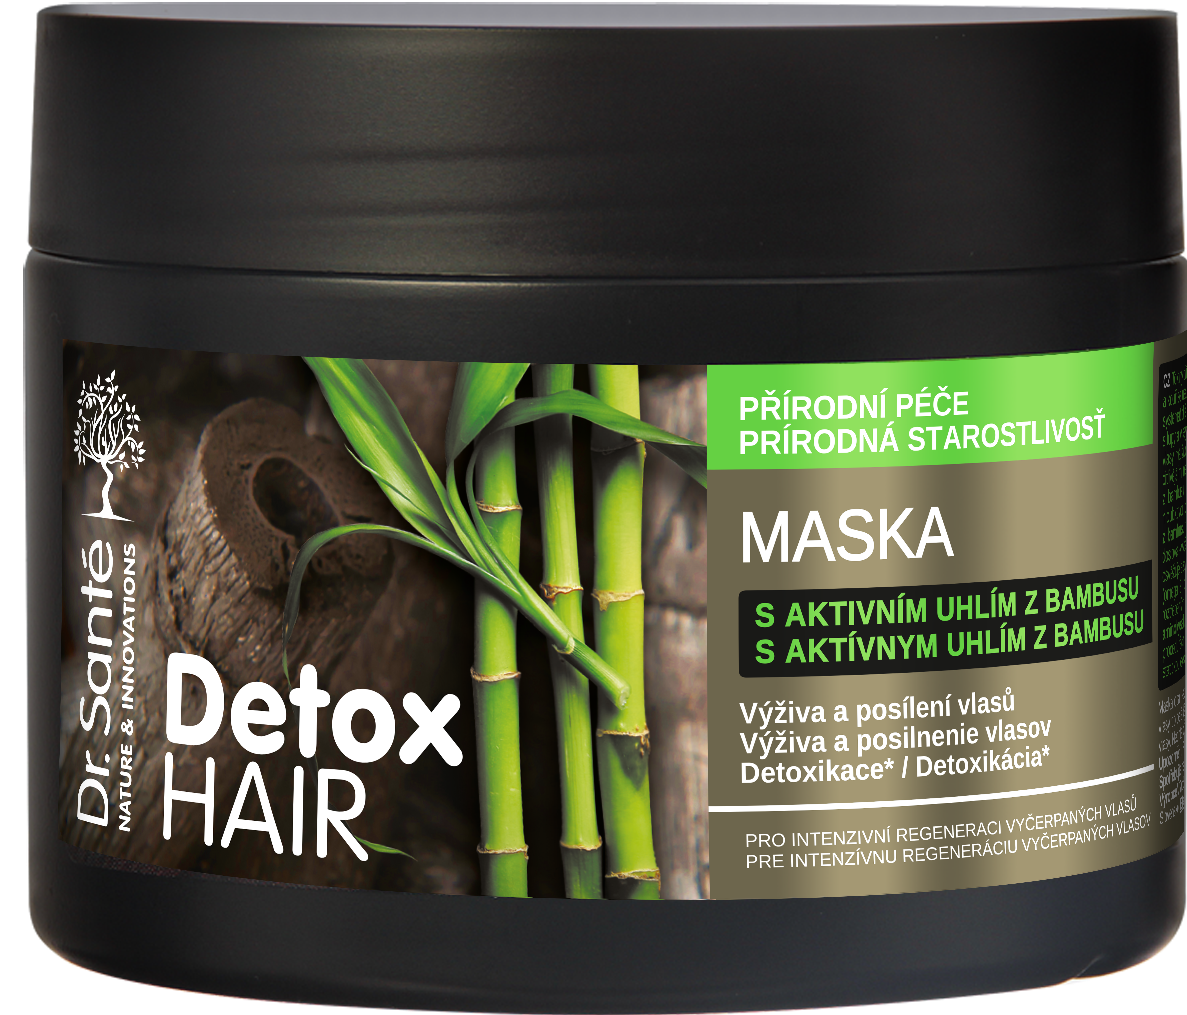 Dr. Santé Detox Hair maska na vlasy 300ml - s aktivním uhlím z bambusu